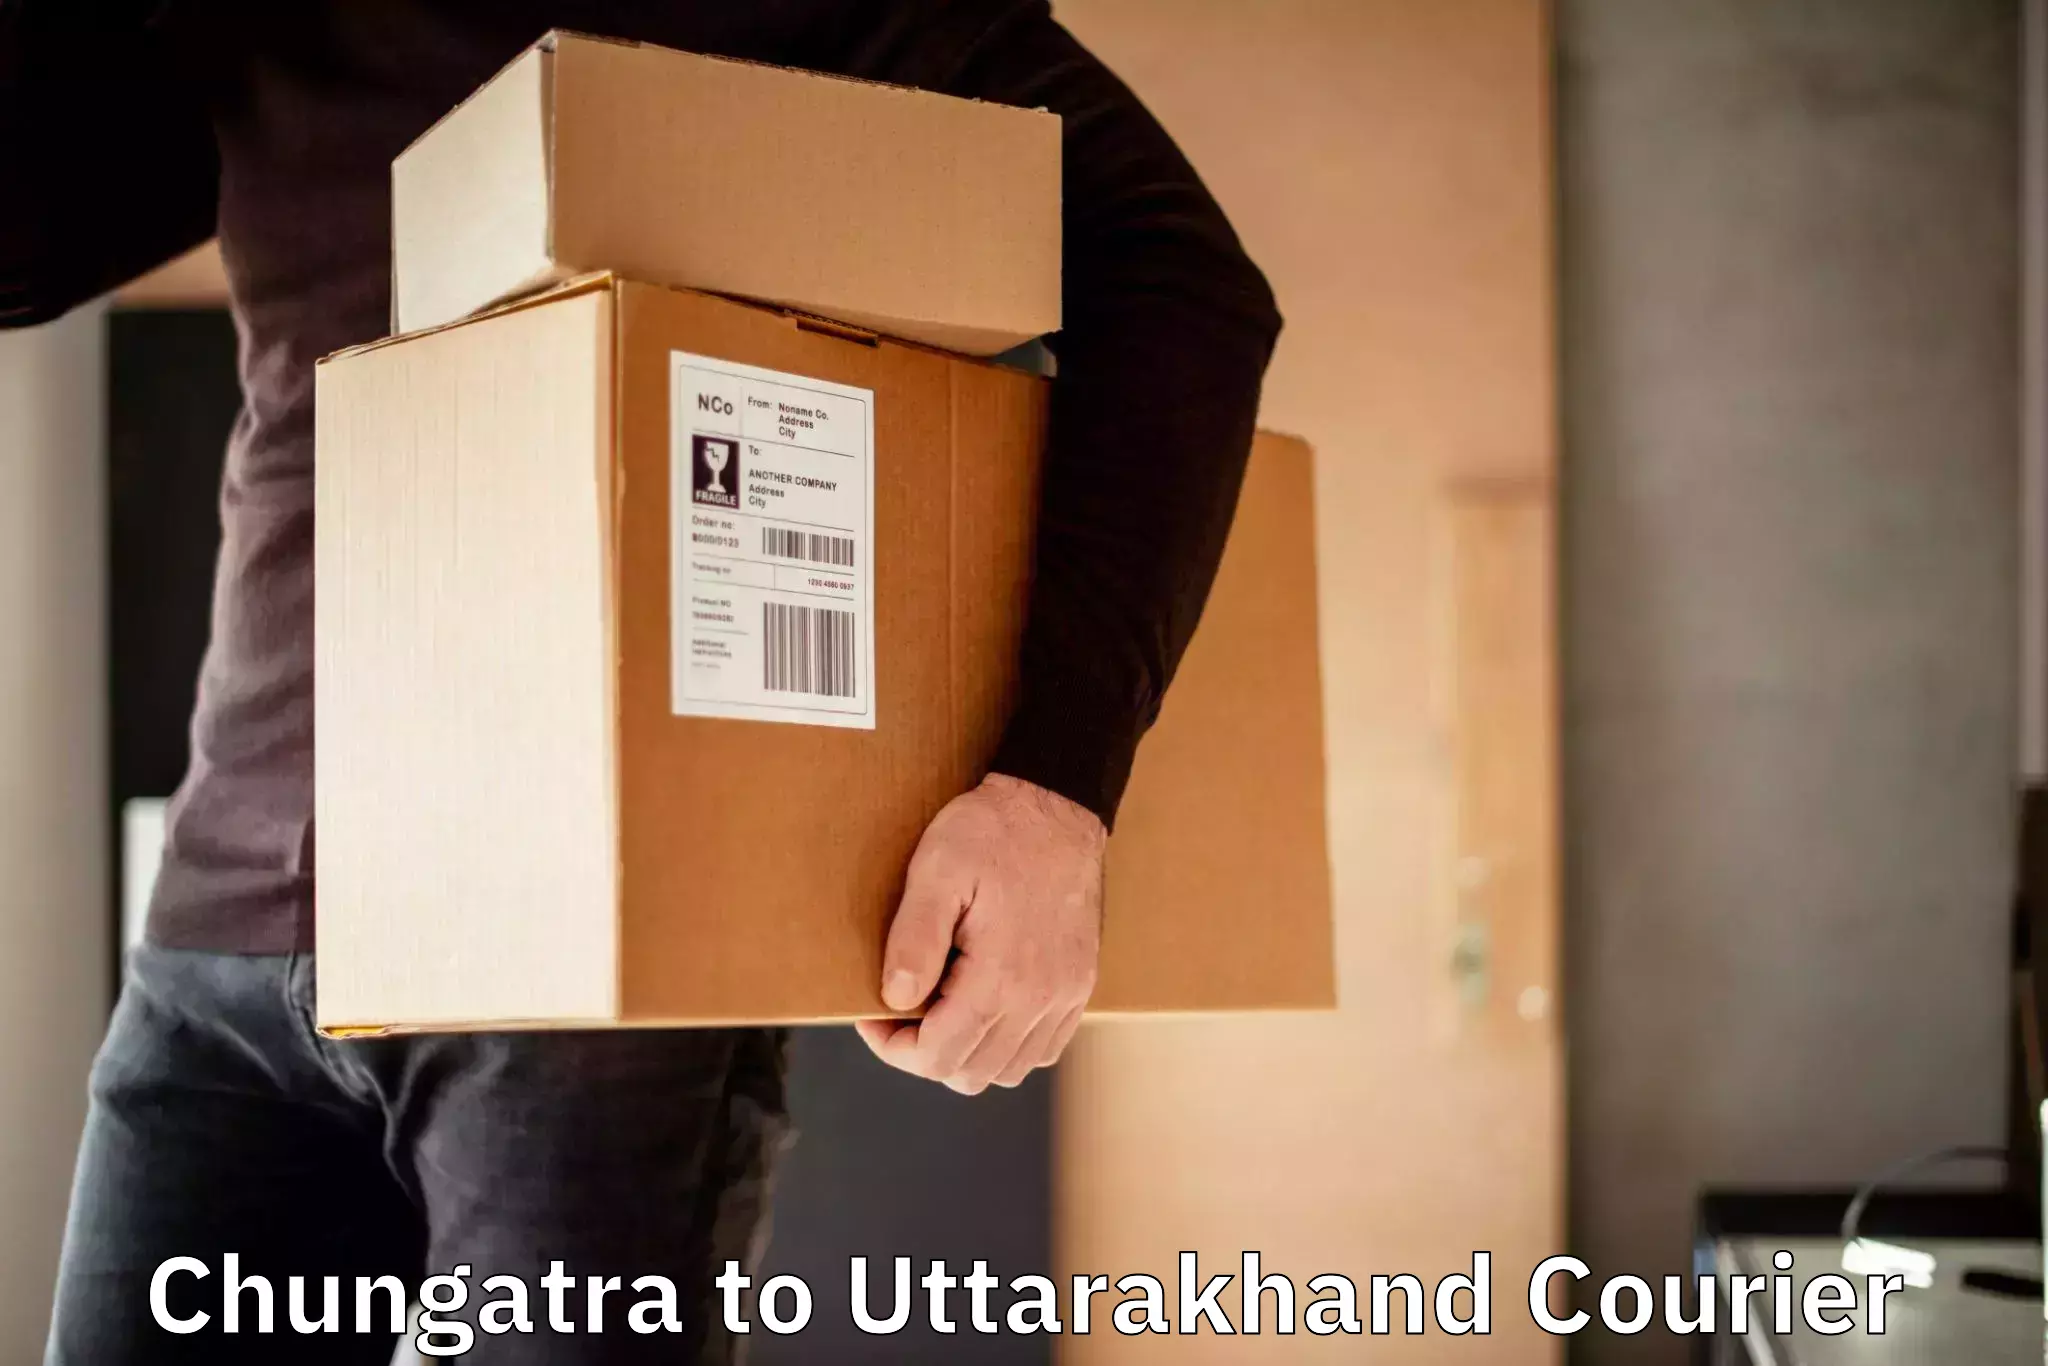 Bulk courier orders Chungatra to Rudrapur